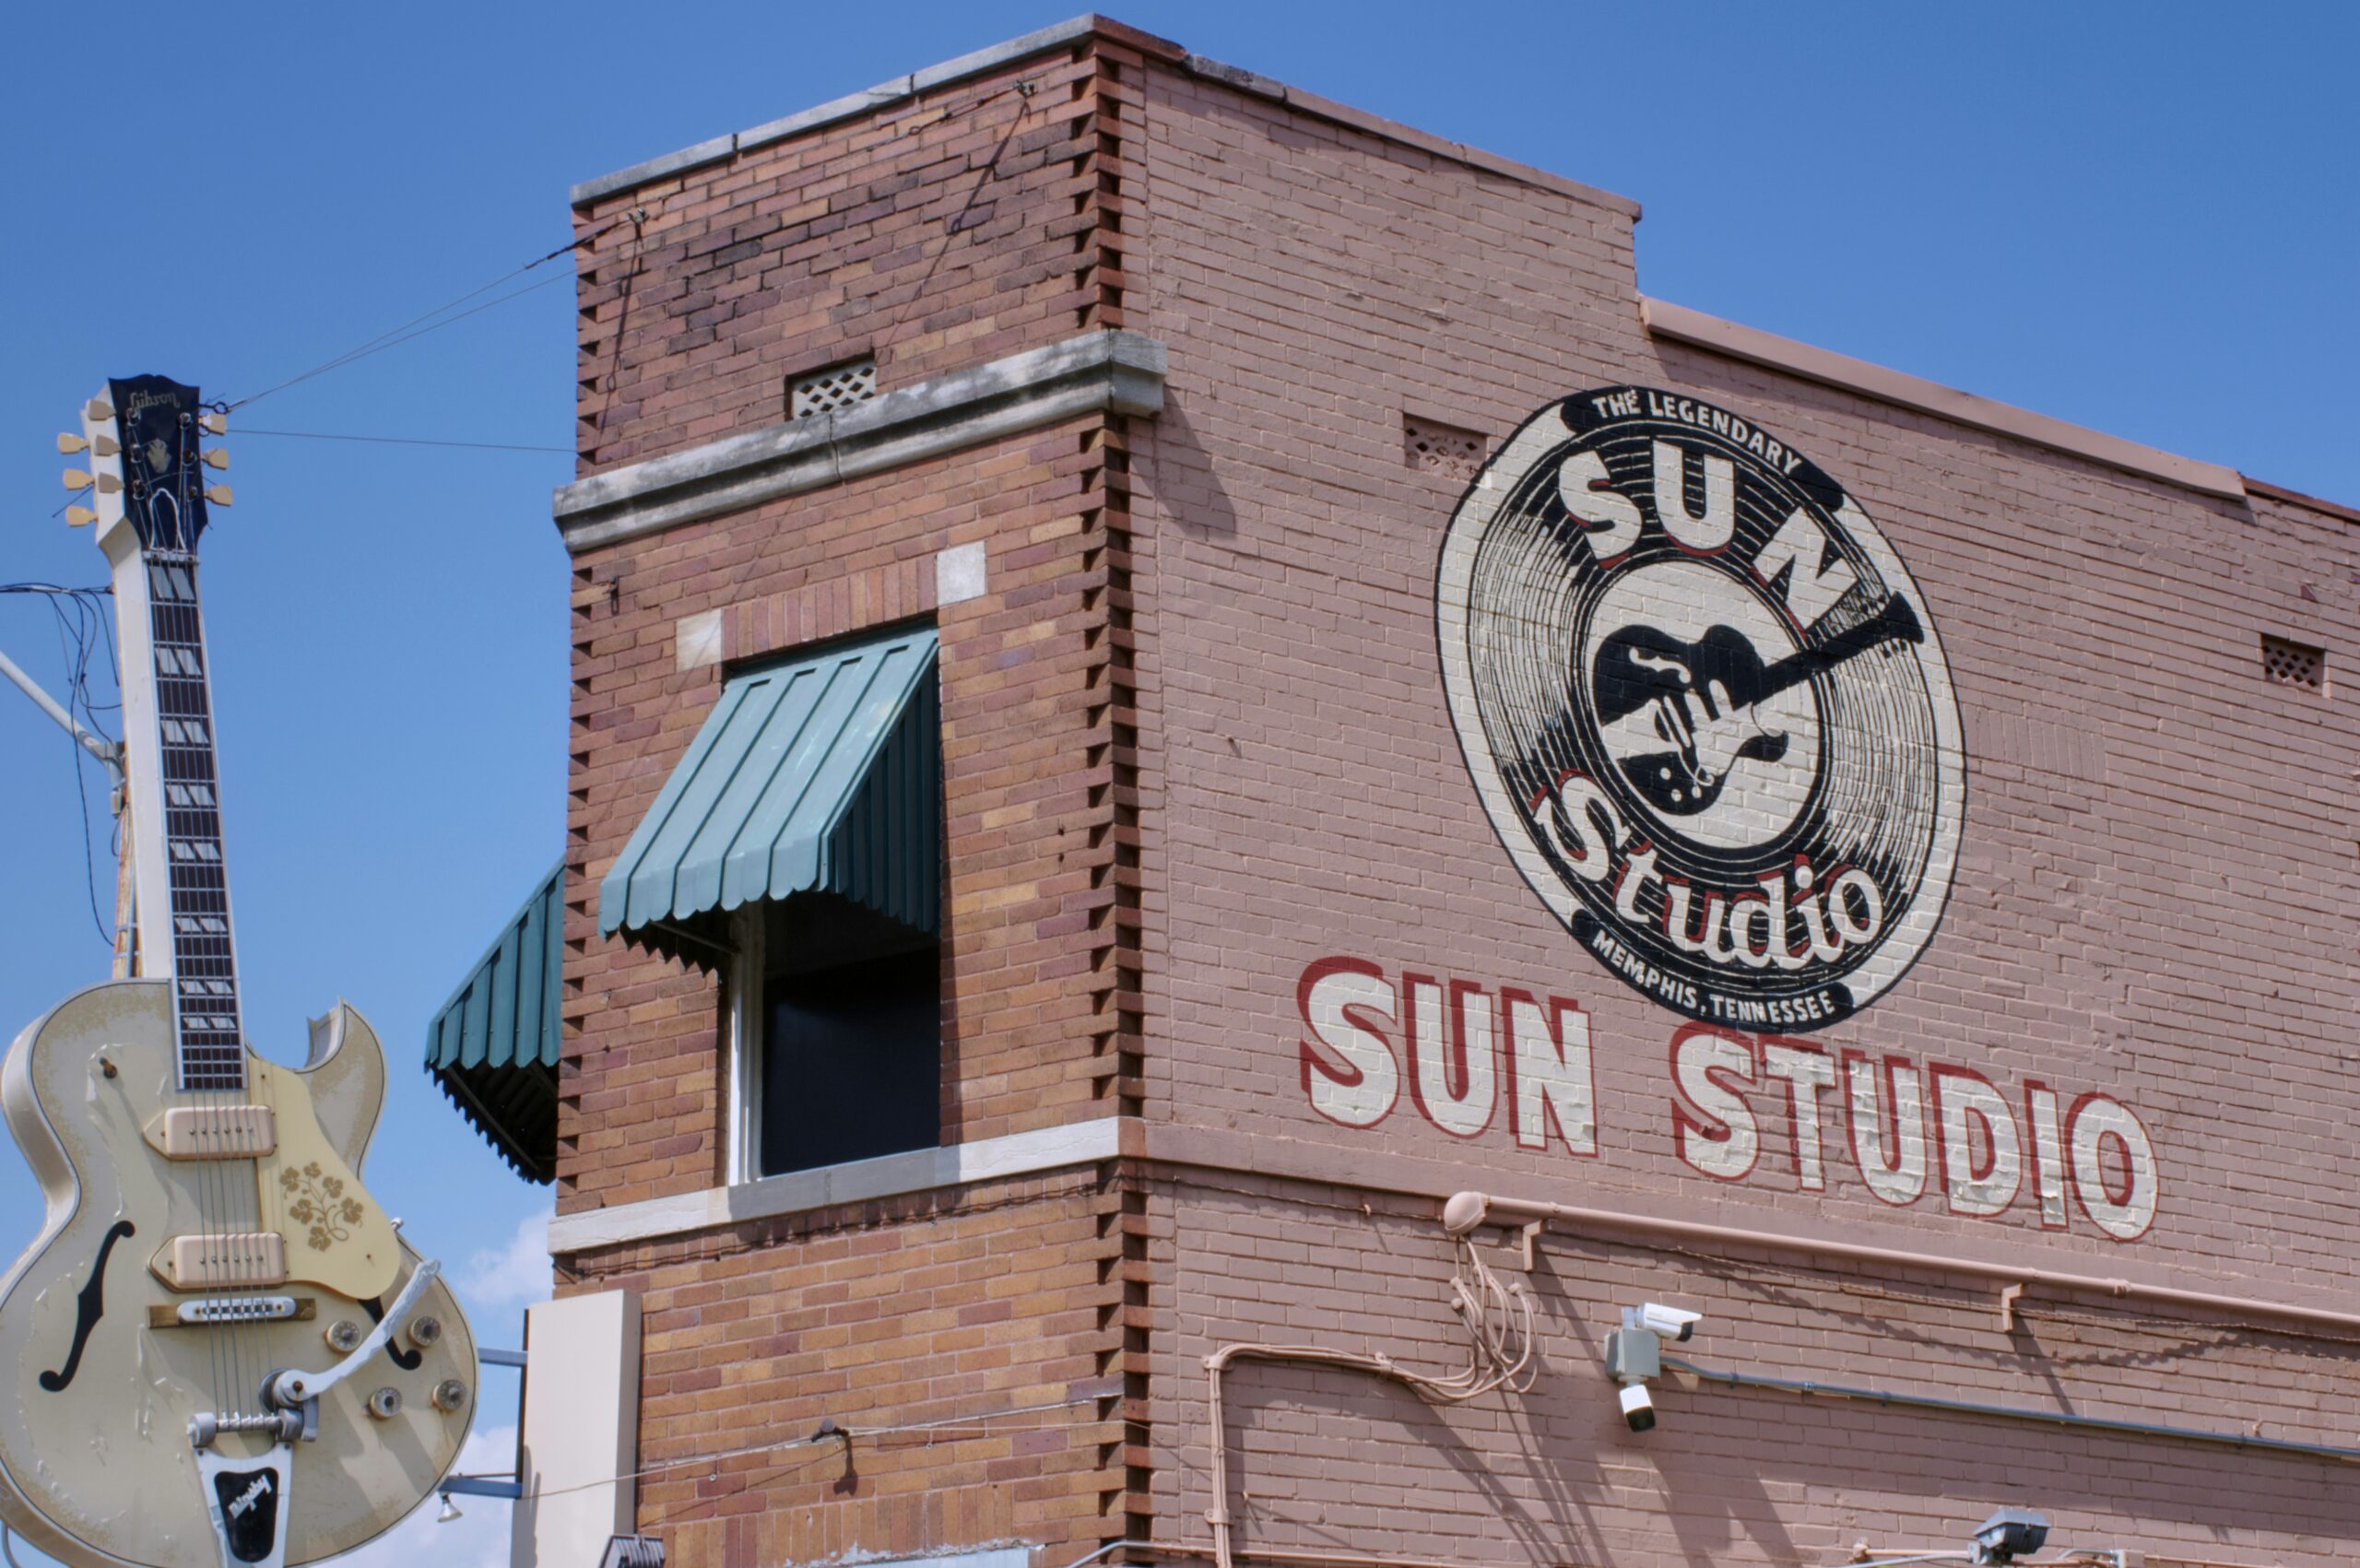 The Sun Studios building in Memphis